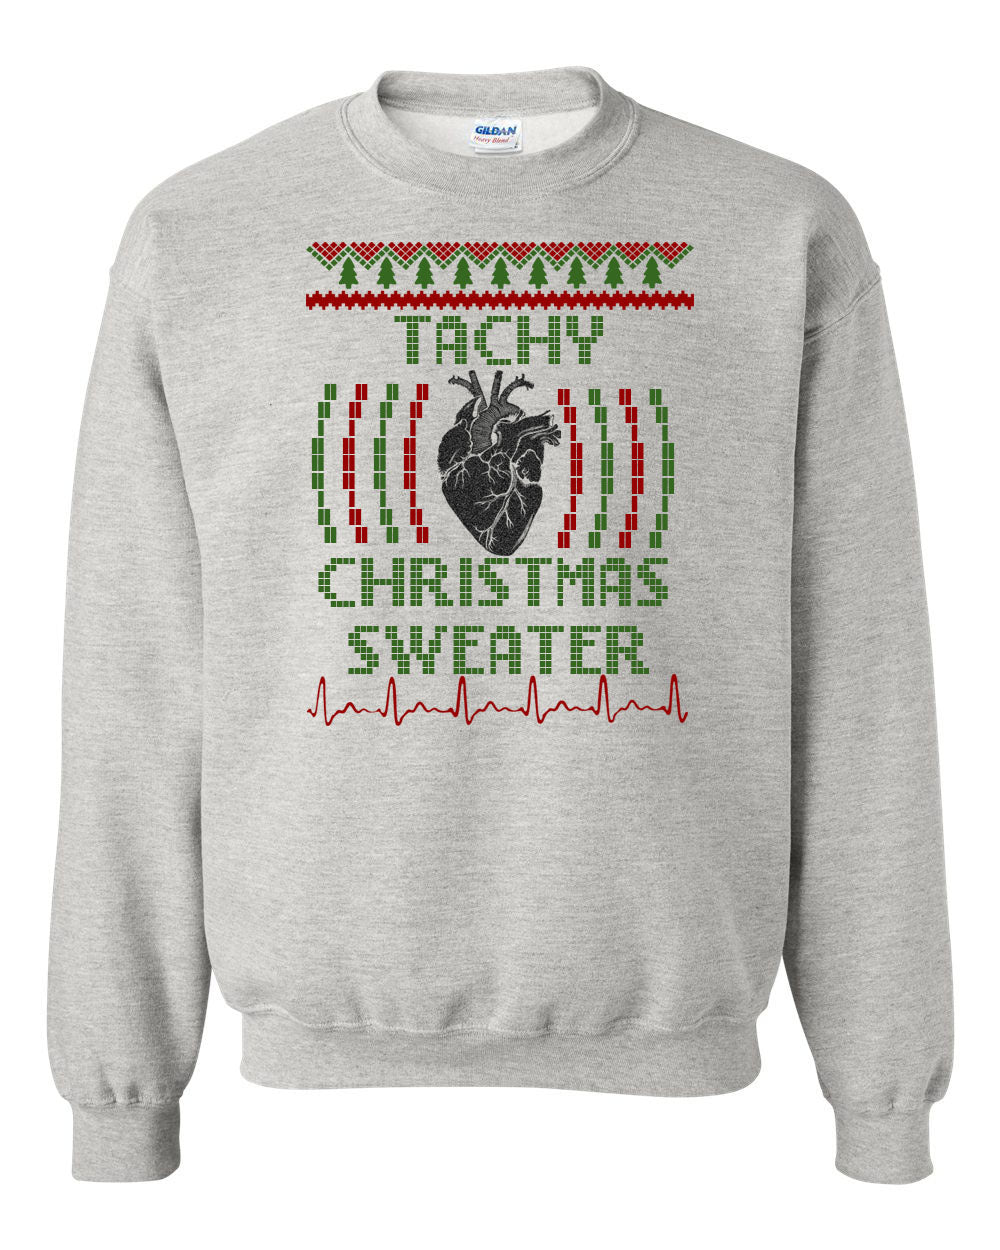 Tachy Christmas sweater non hooded sweatshirt